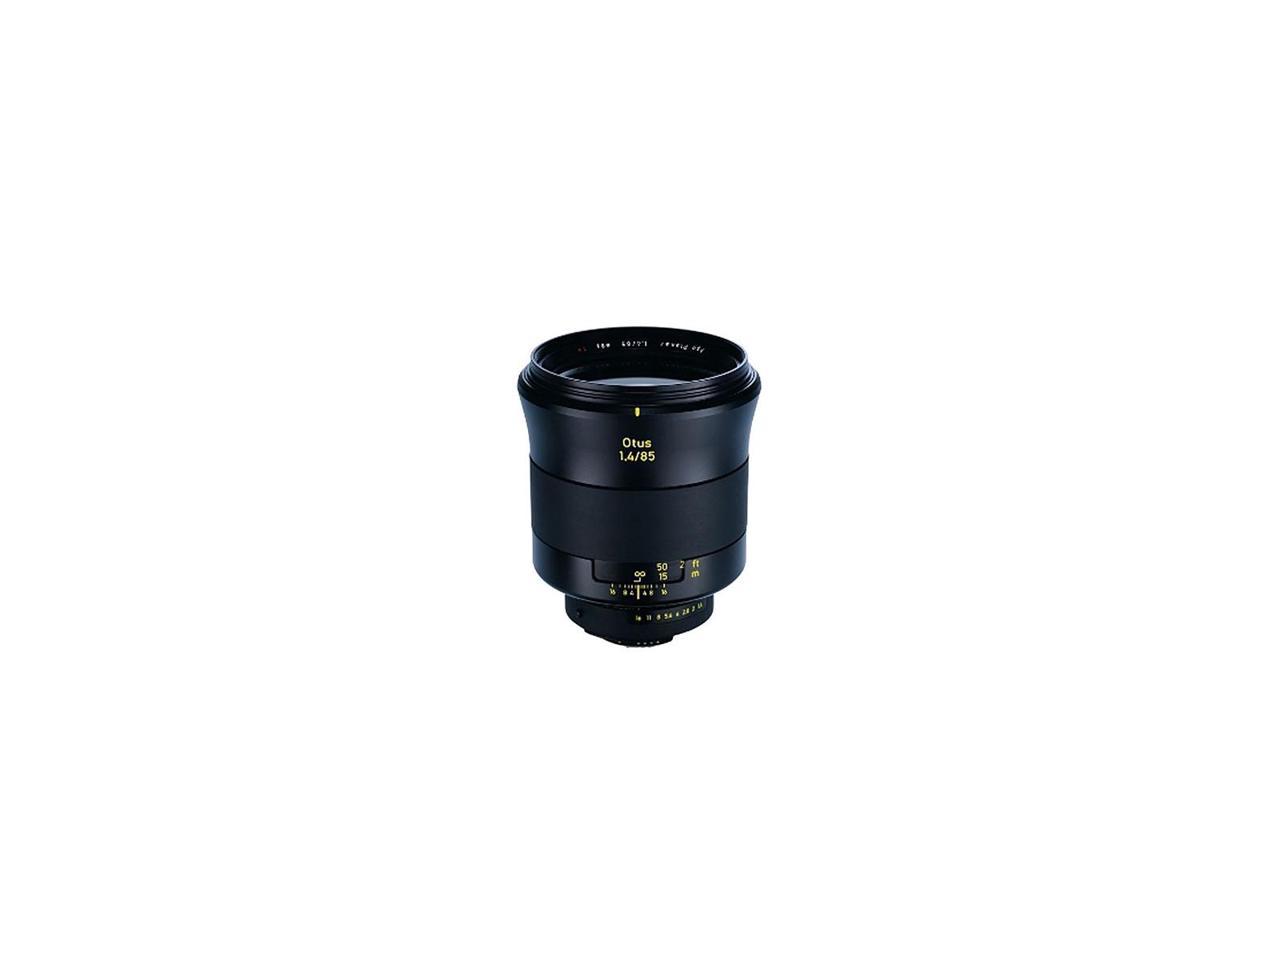 Zeiss 85mm f/1.4 Apo Planar ZF.2 Manual Focusing Lens F/Nikon DSLR Cameras